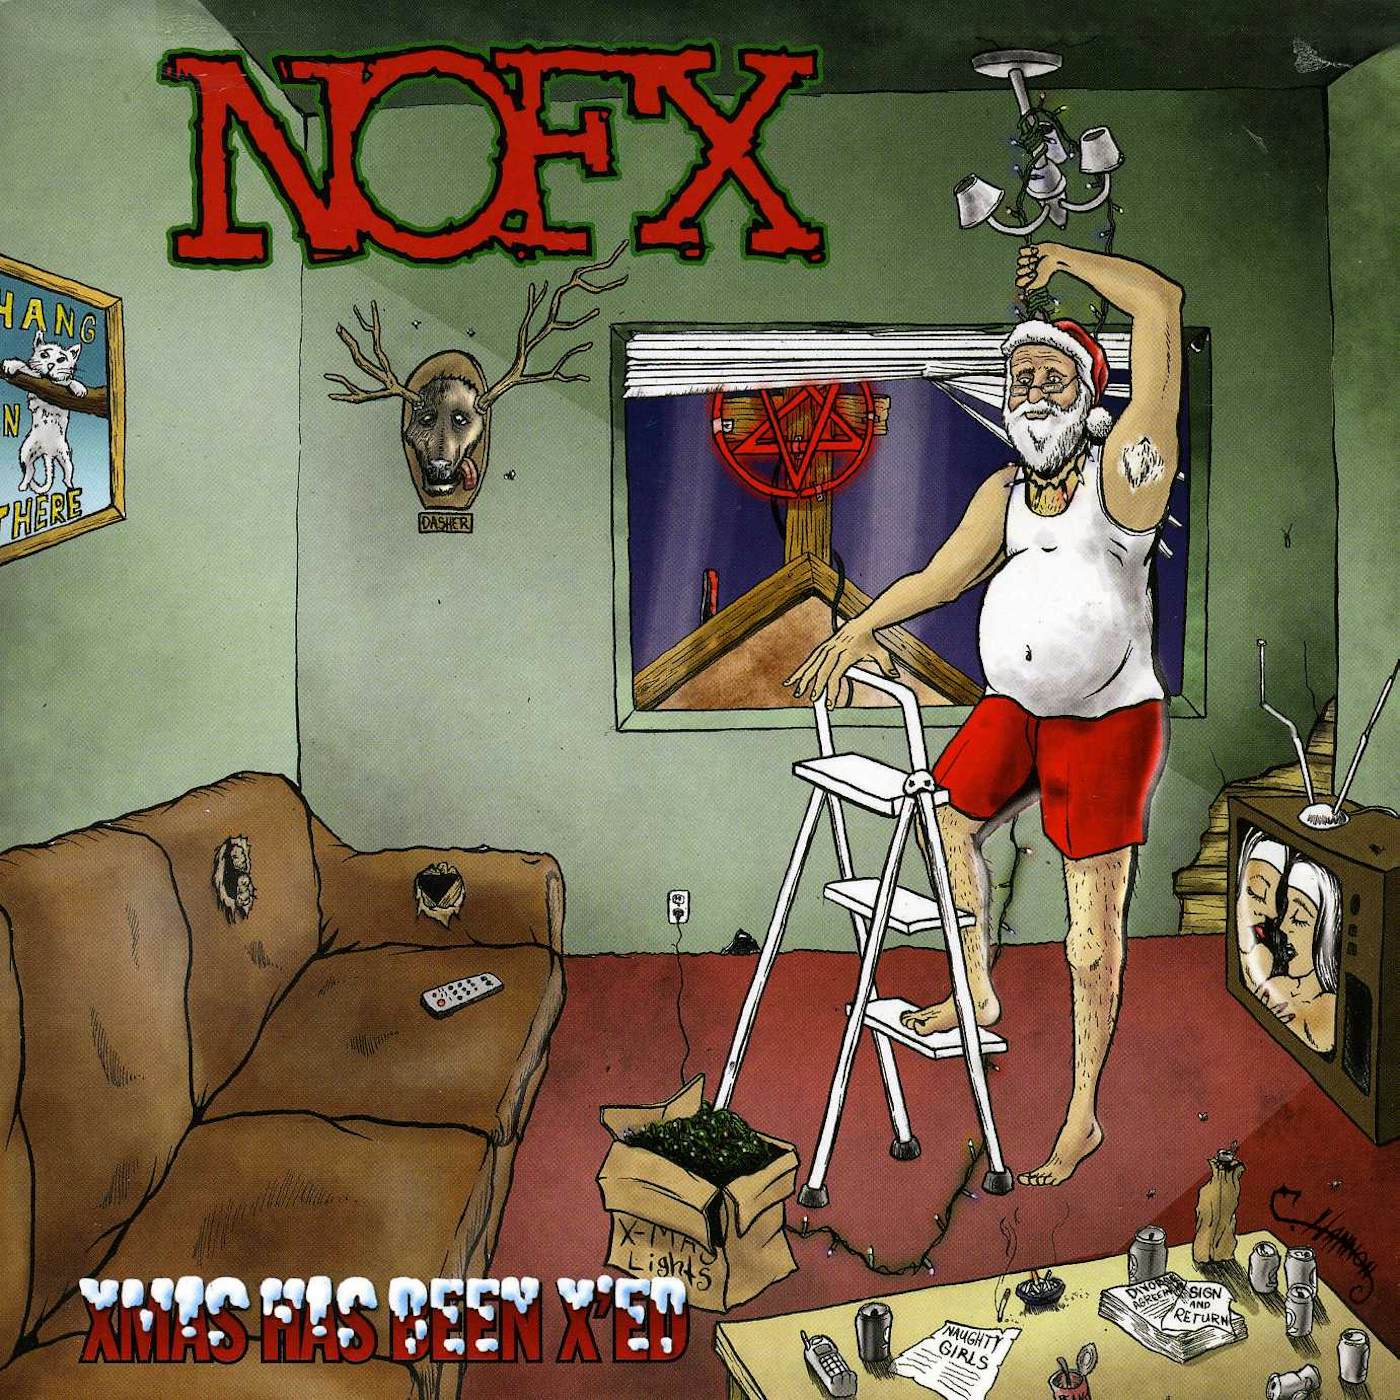 NOFX XMAS HAS BEEN X'ED / NEW YEARS REVOLUTION Vinyl Record